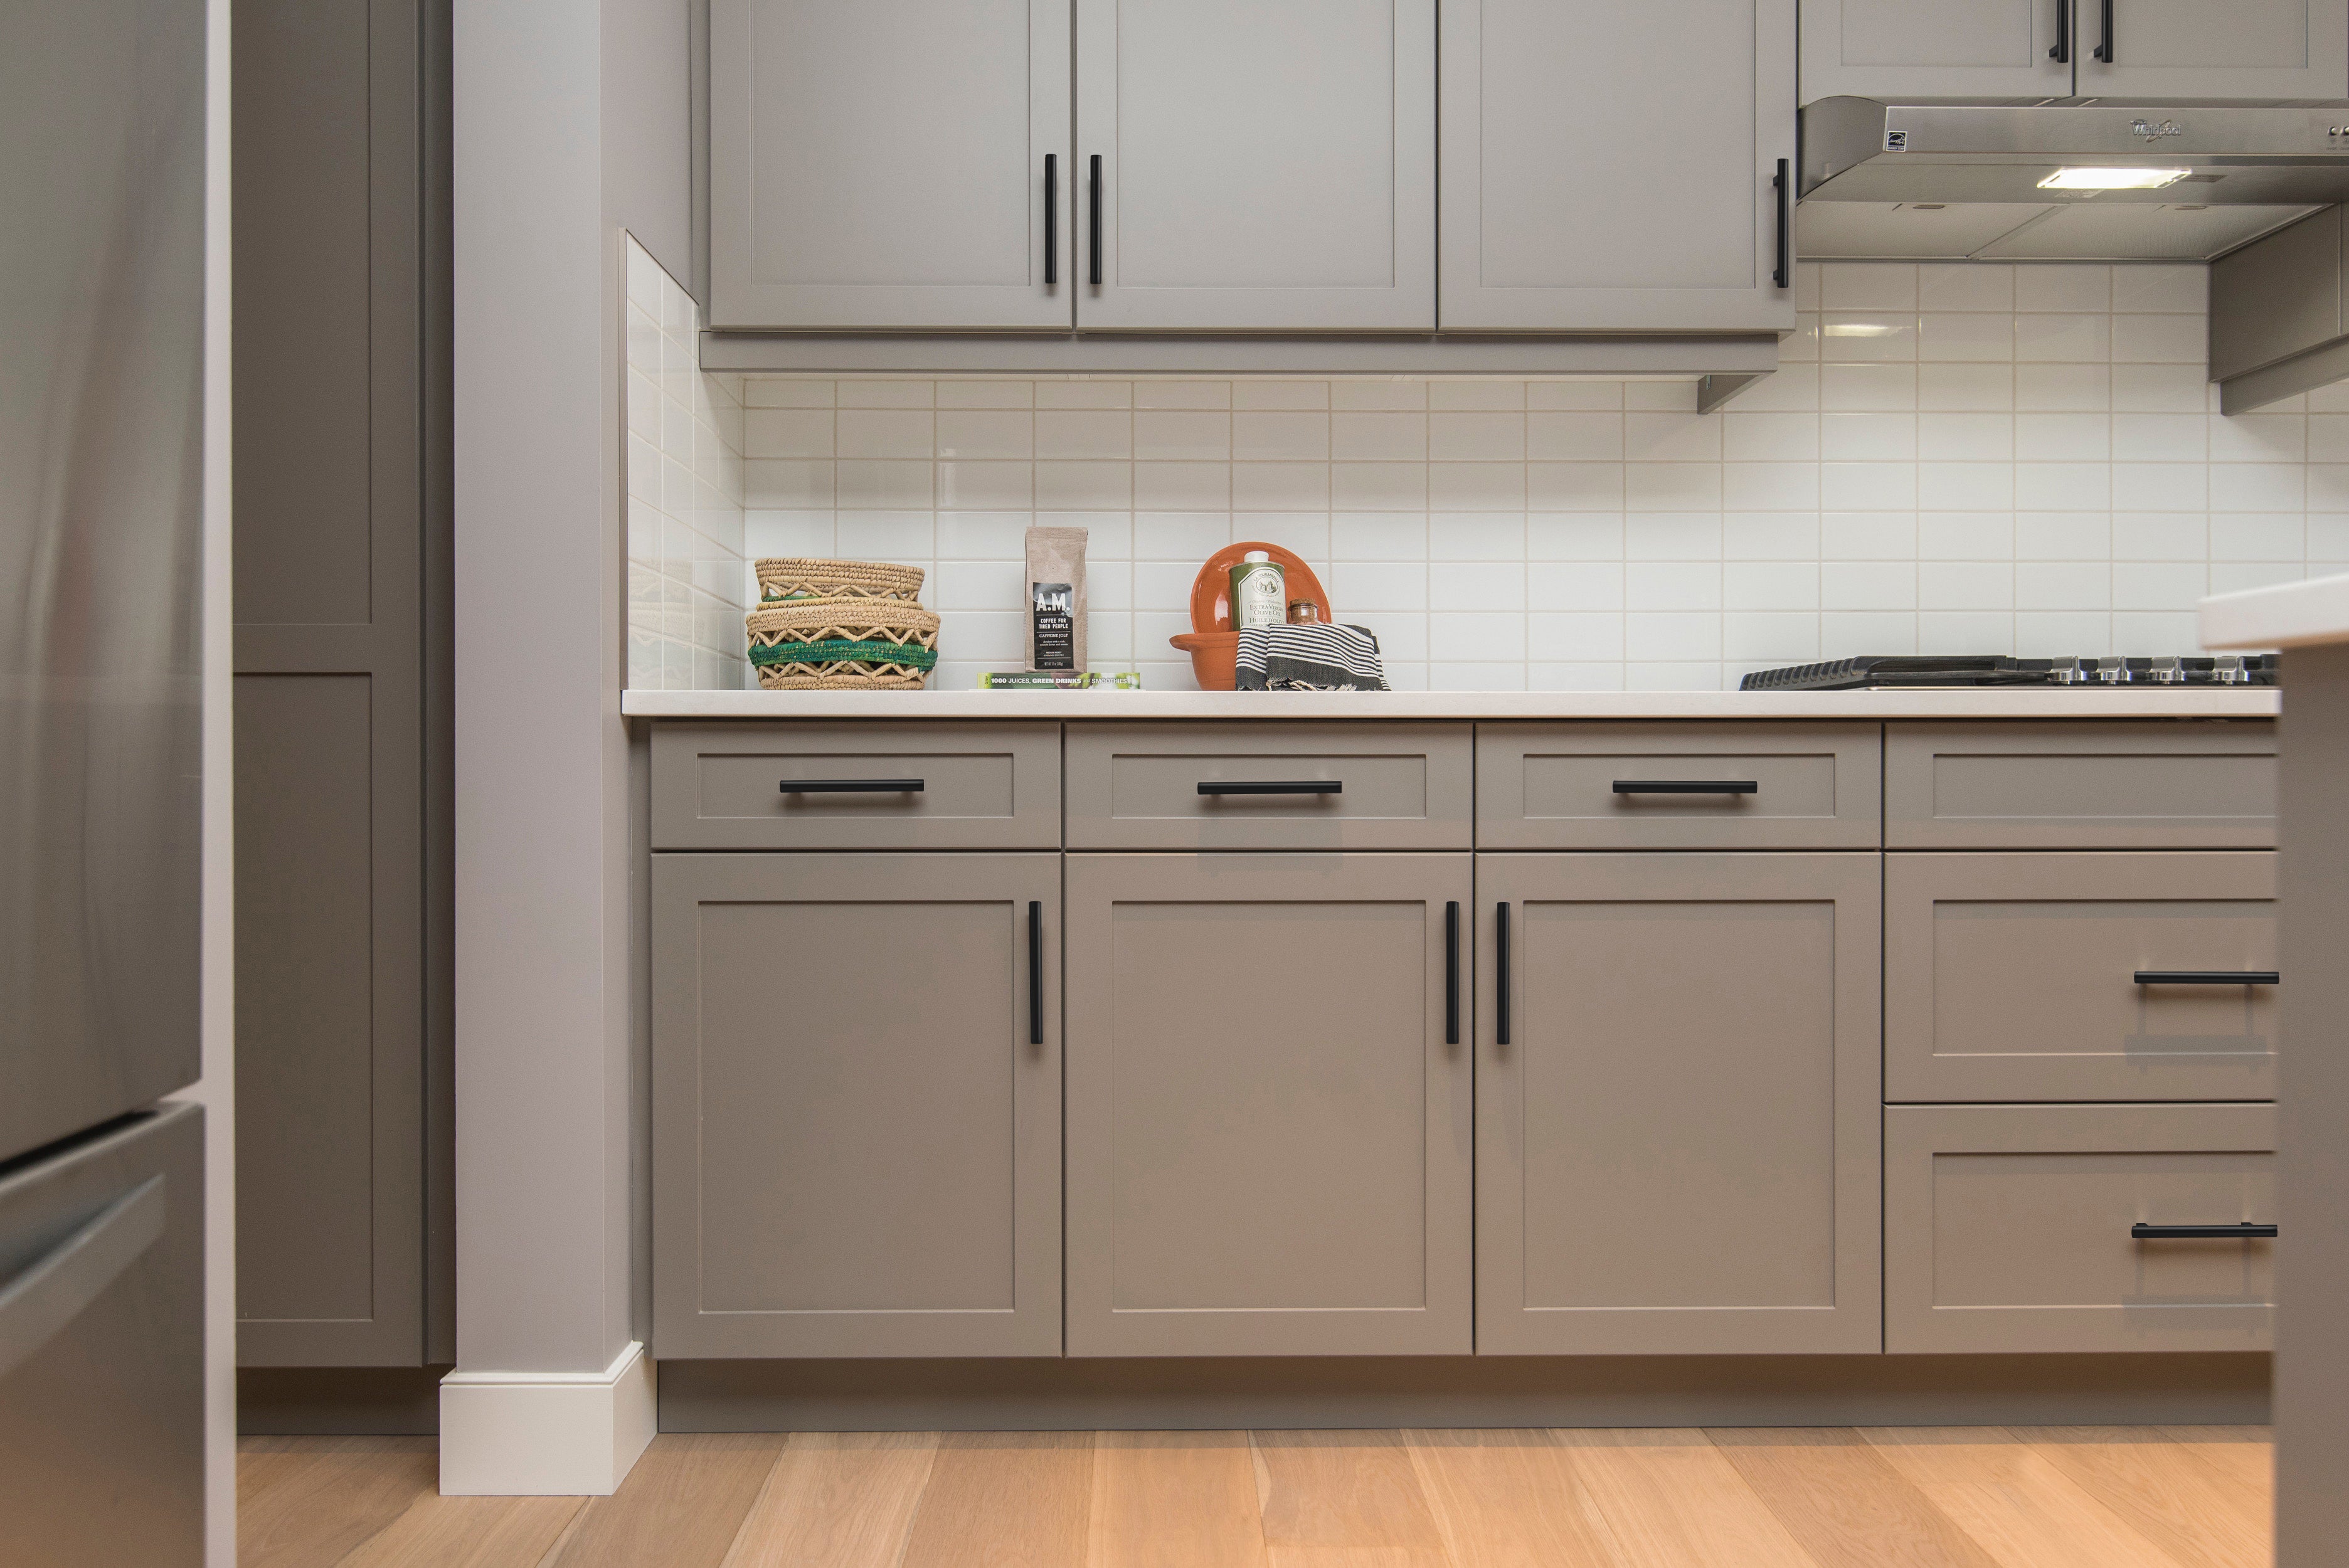 30 Pack 6 inch Cabinet Pulls Matte Black Stainless Steel Kitchen Drawer Pulls Cupboard Handles Cabinet Handles 3.75” Hole Center